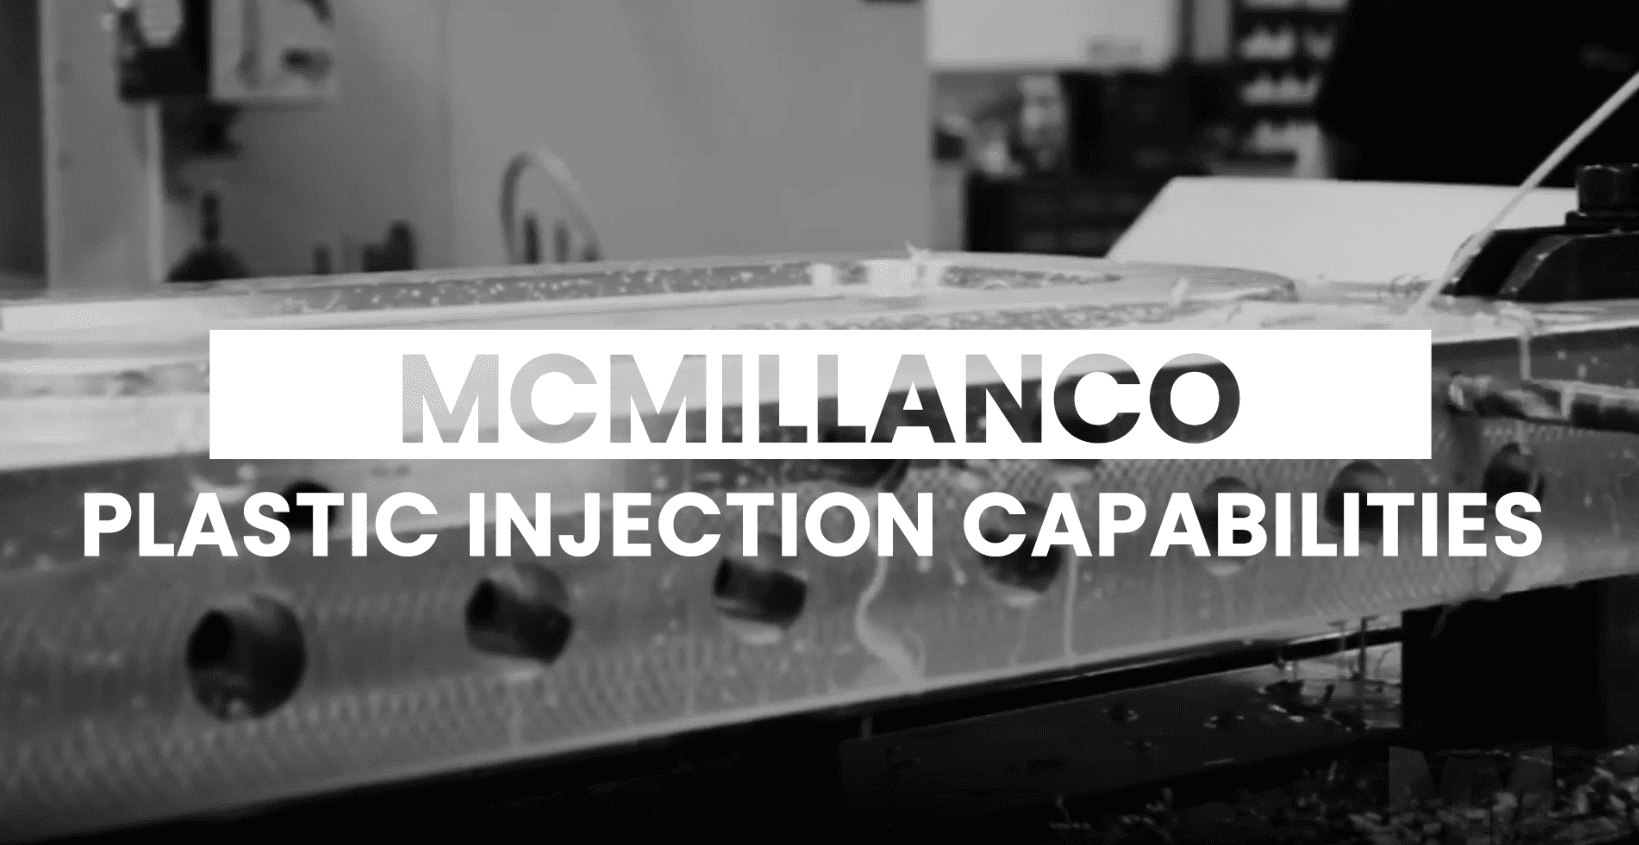 MCMILLANCO Plastic Injection Capabilities